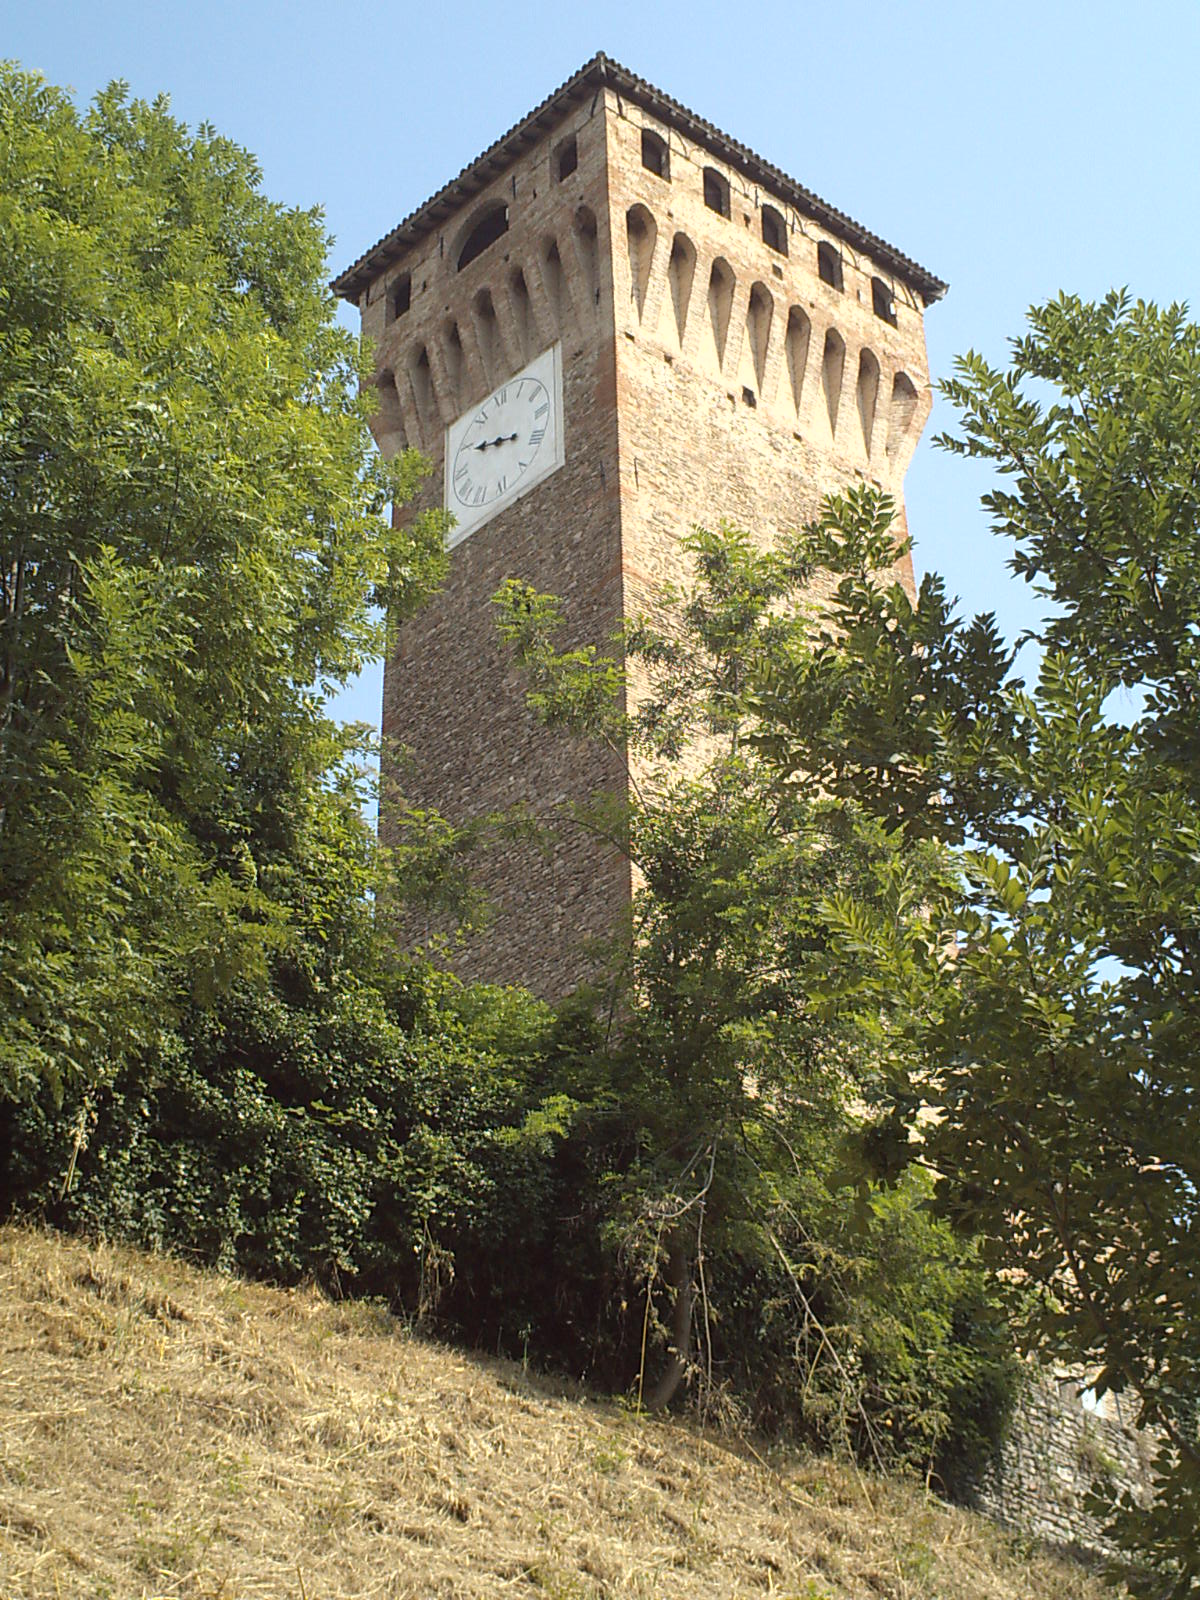 photo: https://upload.wikimedia.org/wikipedia/commons/8/89/Torre_orologio_dal_lato_sud-est.JPG